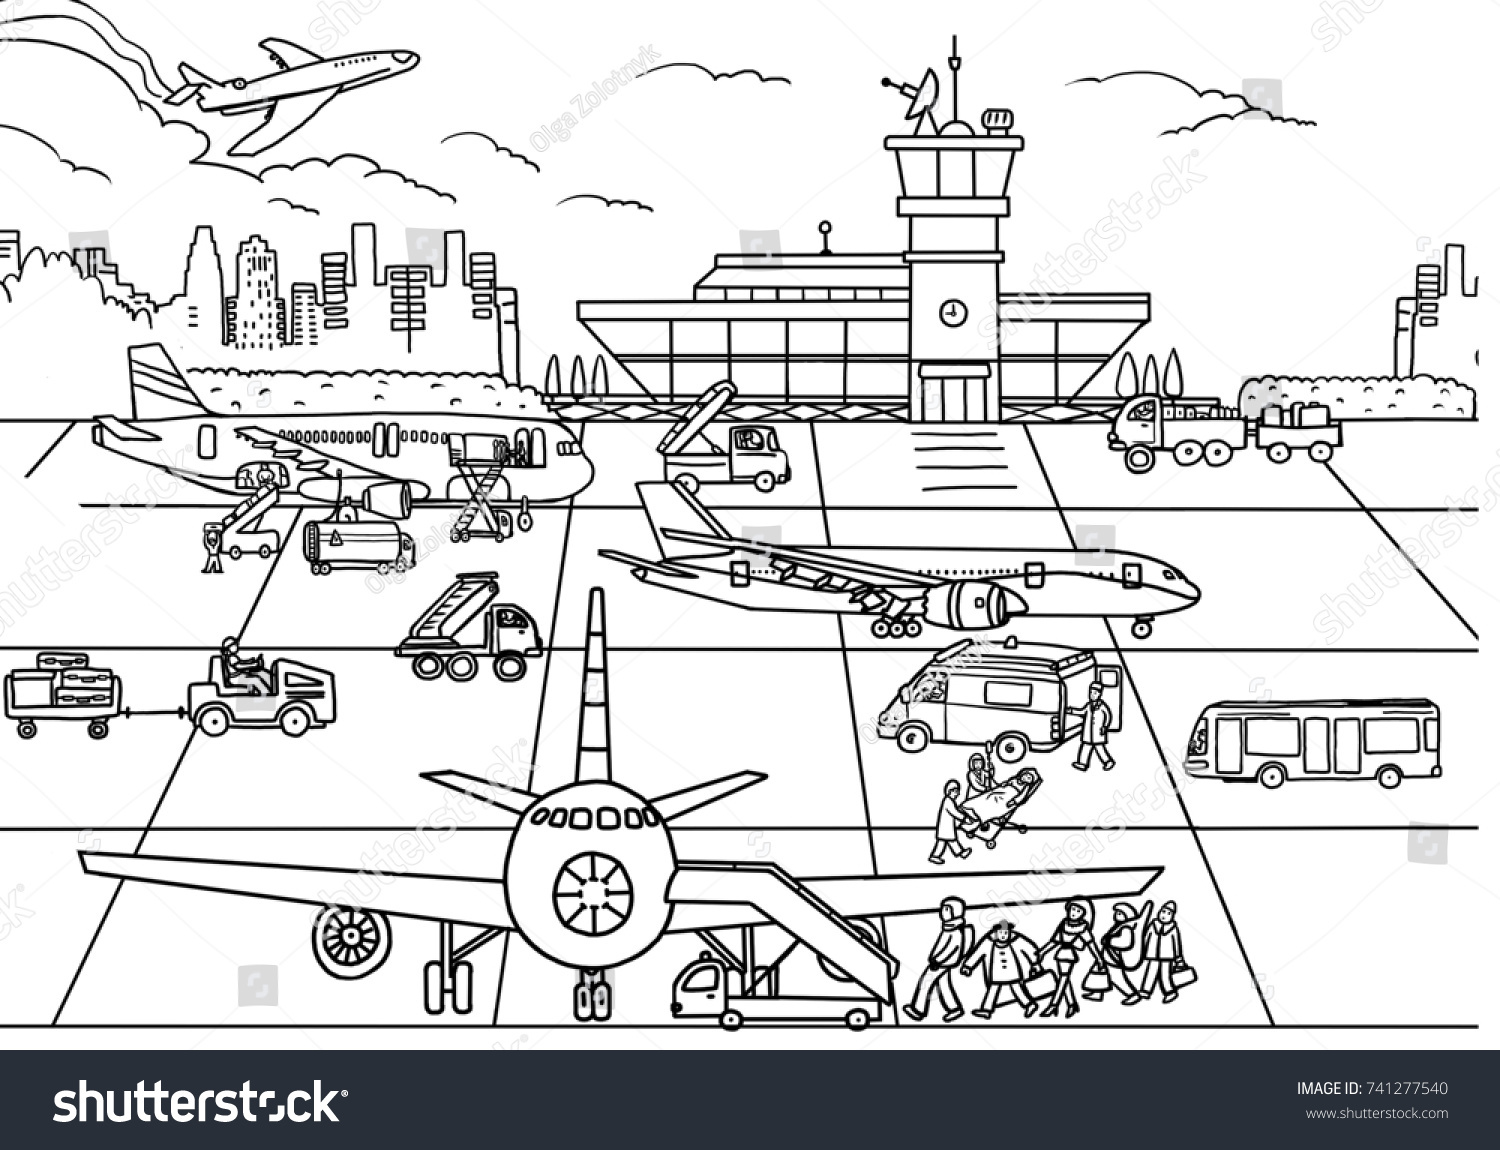 Coloring Airport Scene Plane On Runway Stock Illustration ...